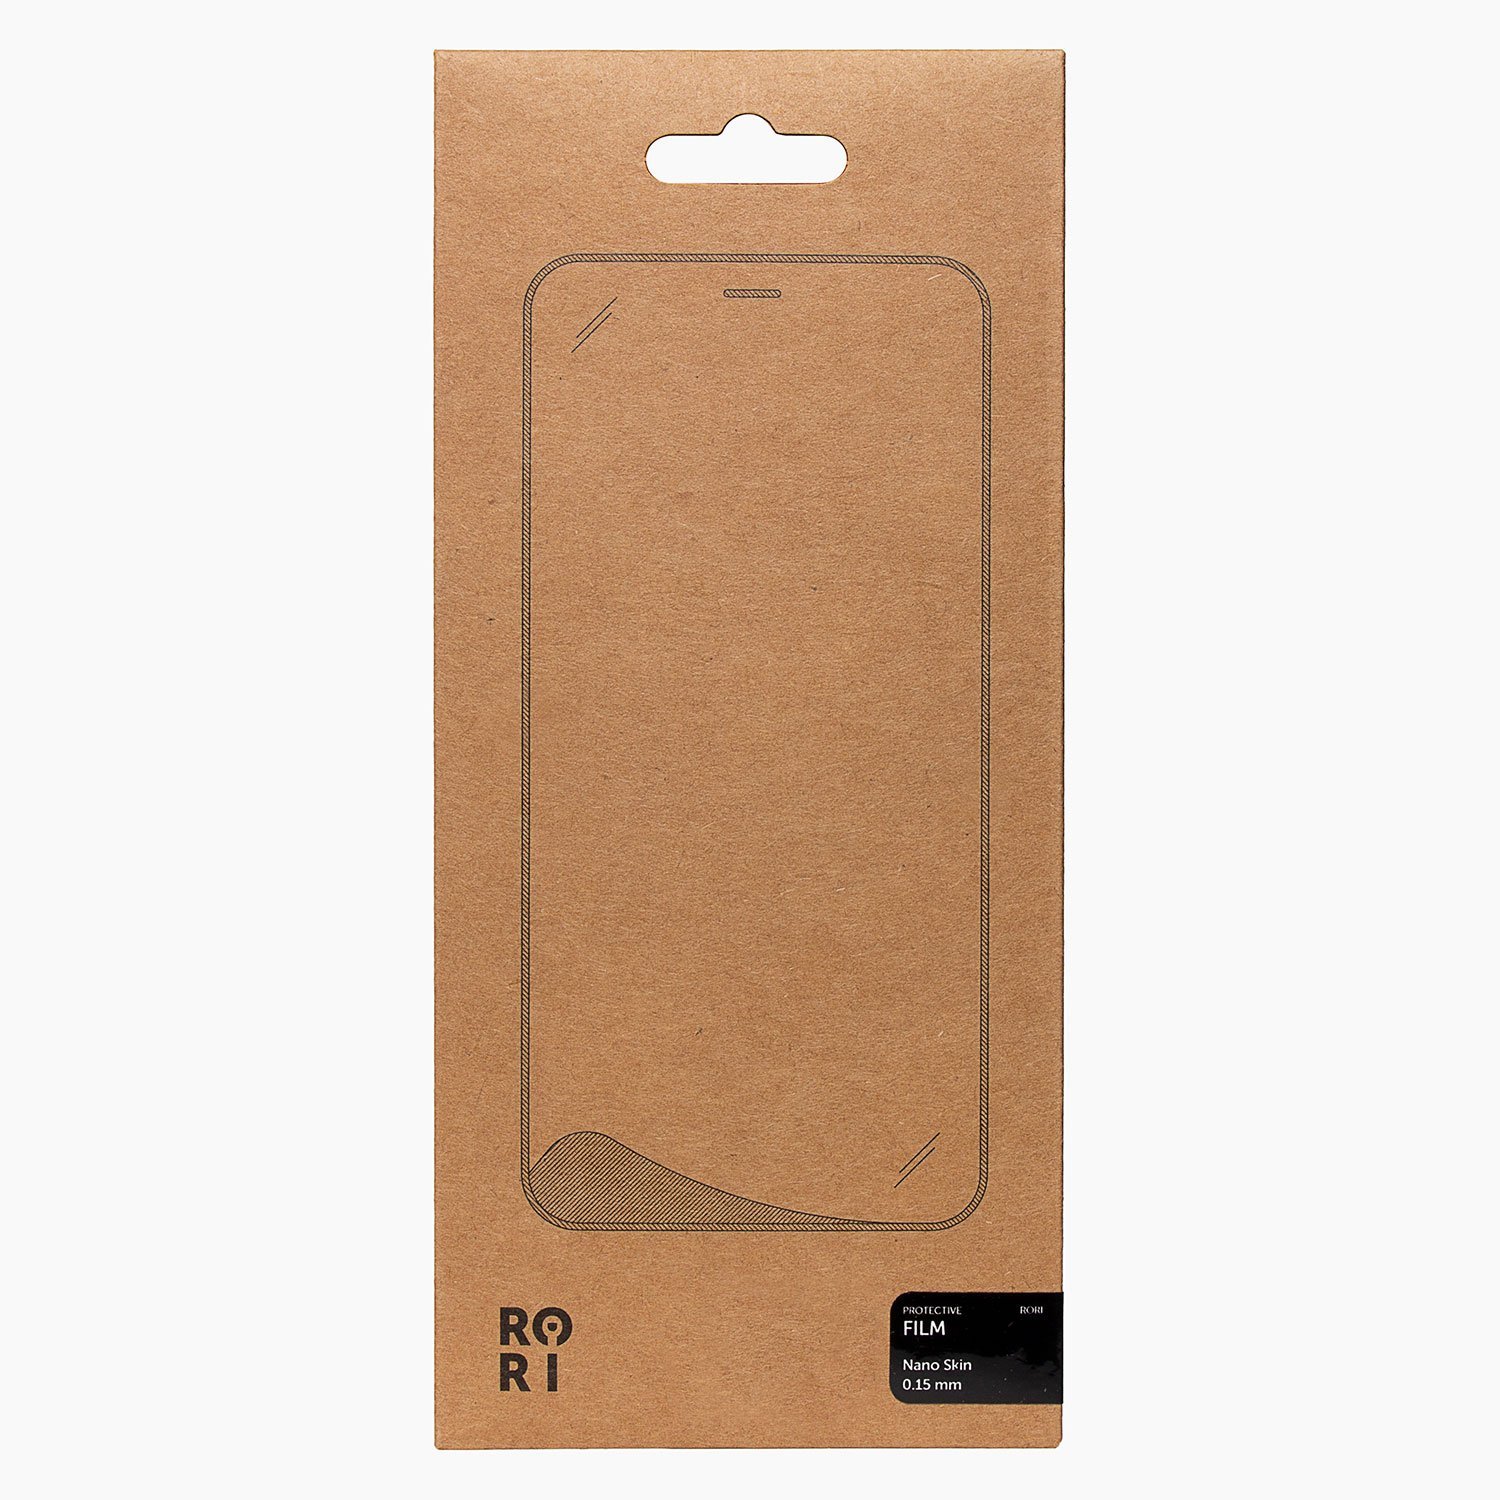 Защитная пленка Rori Polymer для экрана смартфона Apple iPhone XS Max / iPhone 11 Pro Max, FullScreen, поверхность матовая, черная рамка (119497)